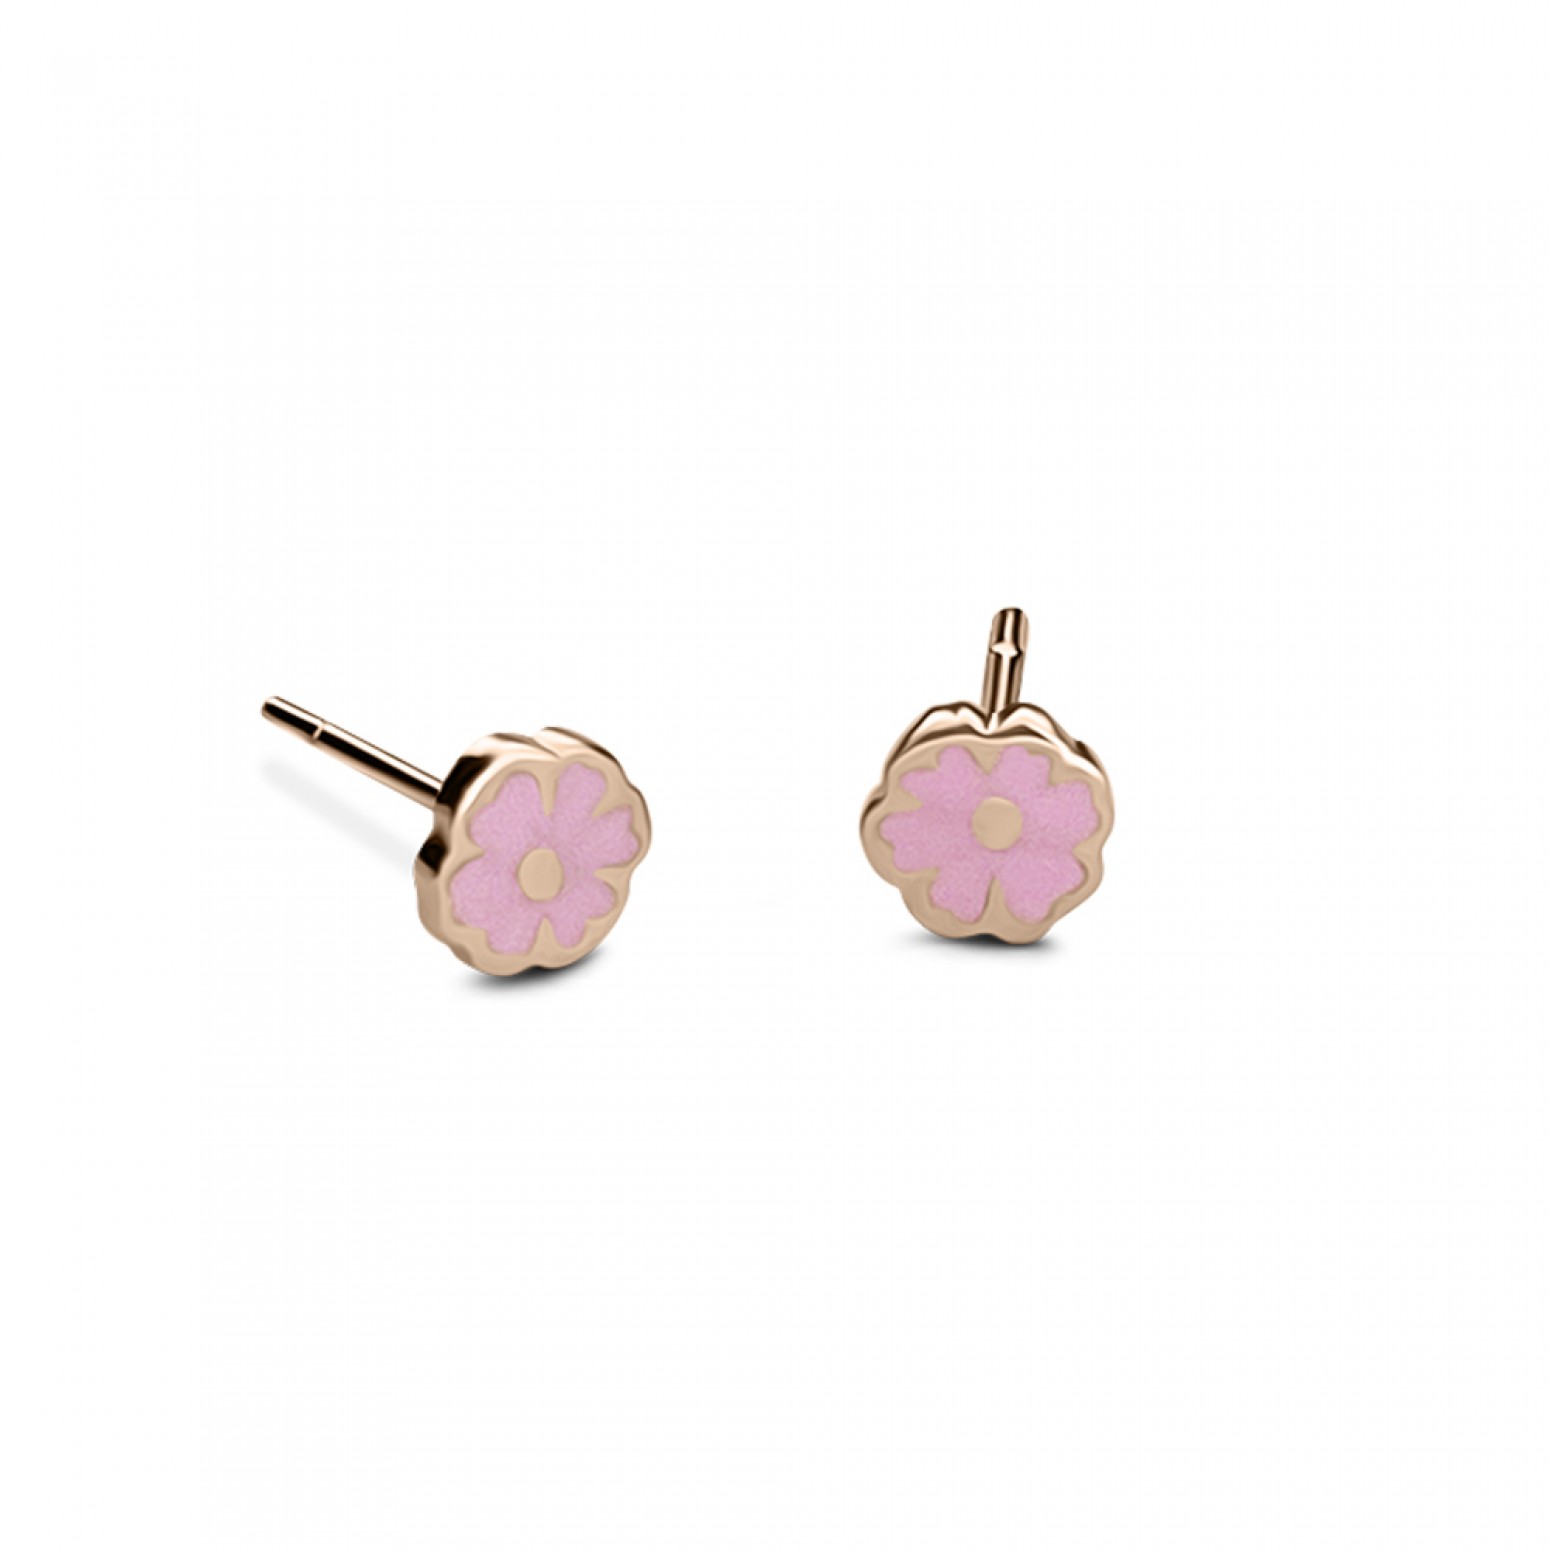 Flower baby earrings K9 pink gold with enamel, ps0144 EARRINGS Κοσμηματα - chrilia.gr